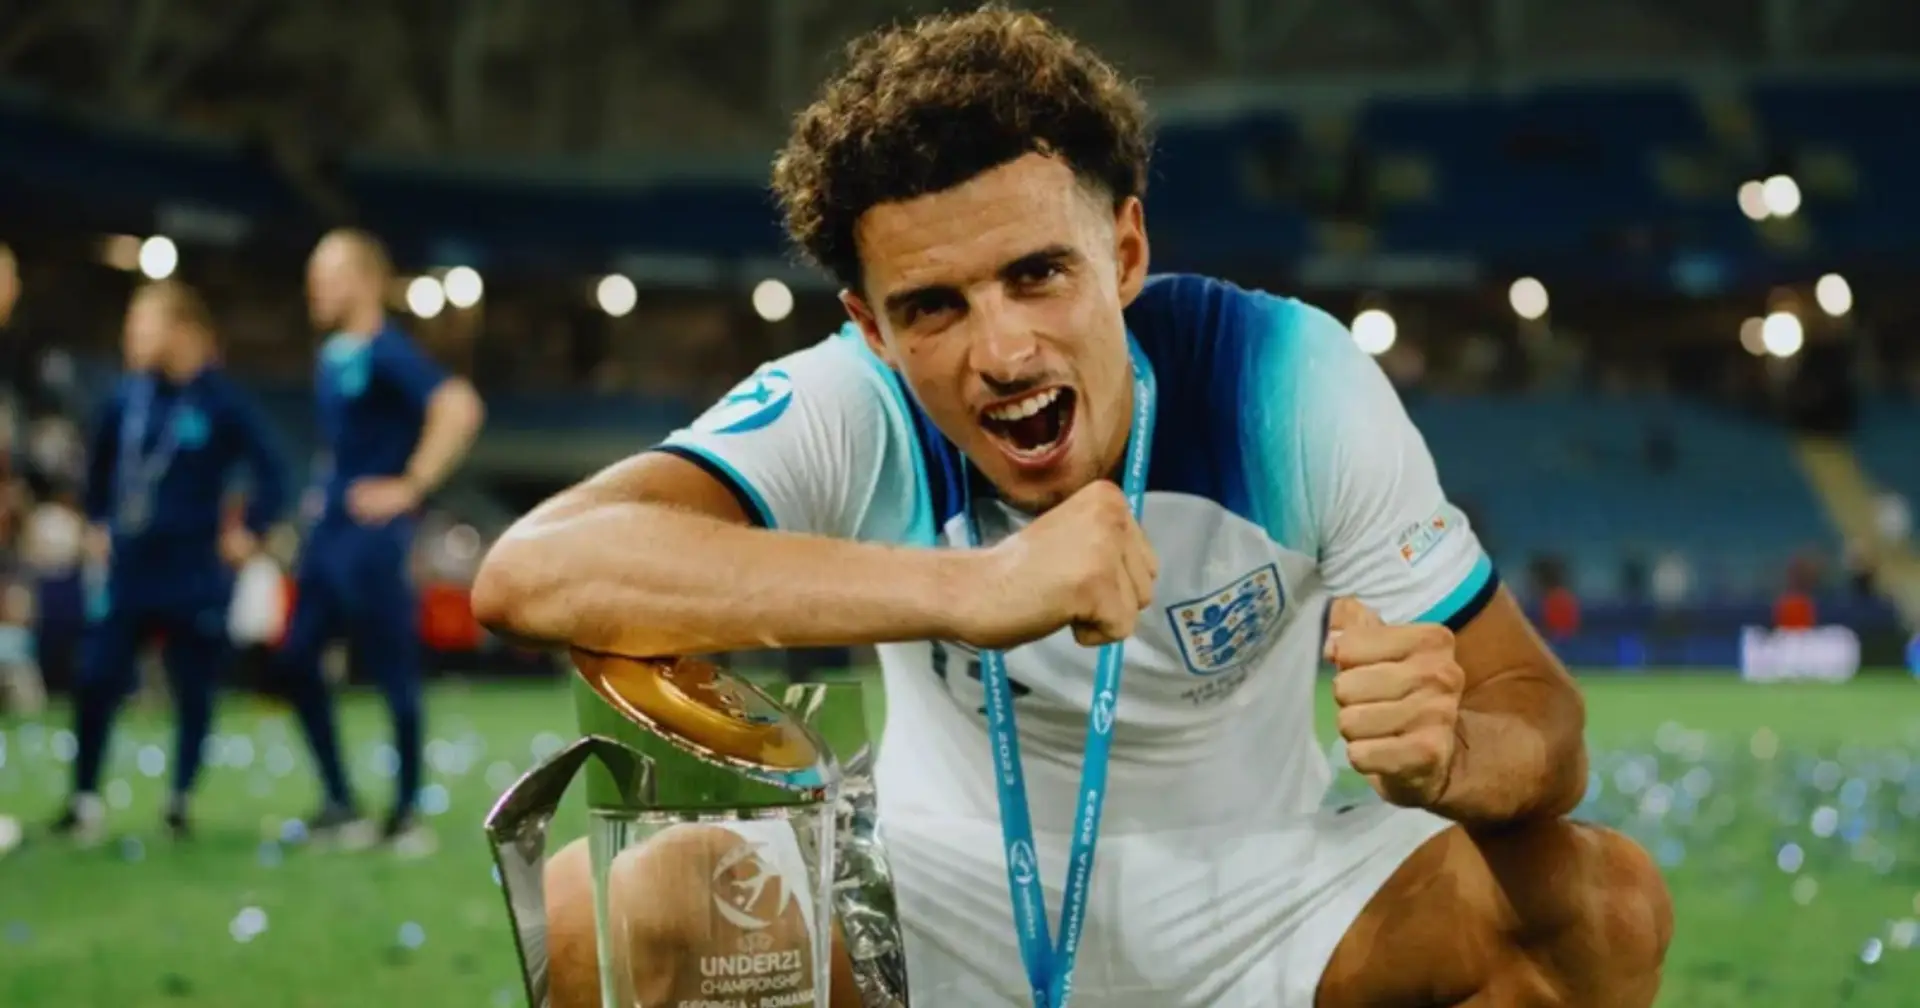 Curtis Jones reacts to winning U21 Euro with England